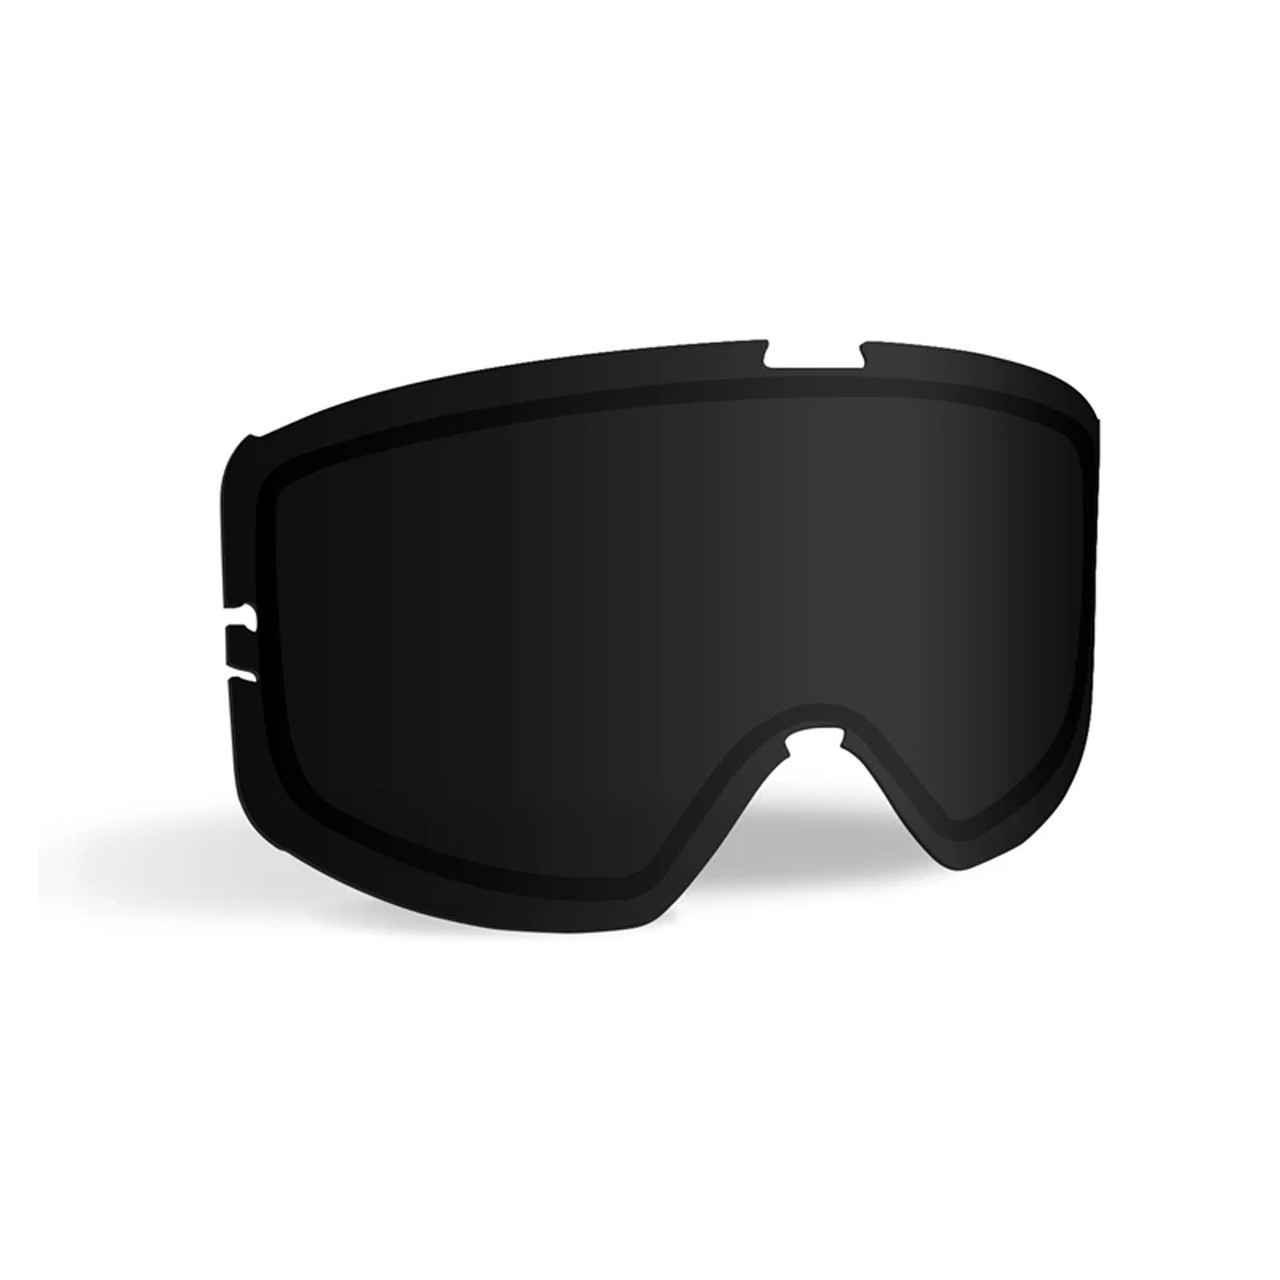 Polaris New OEM 509® Kingpin Goggles, Polarized Replacement Goggle Lens, 2868550